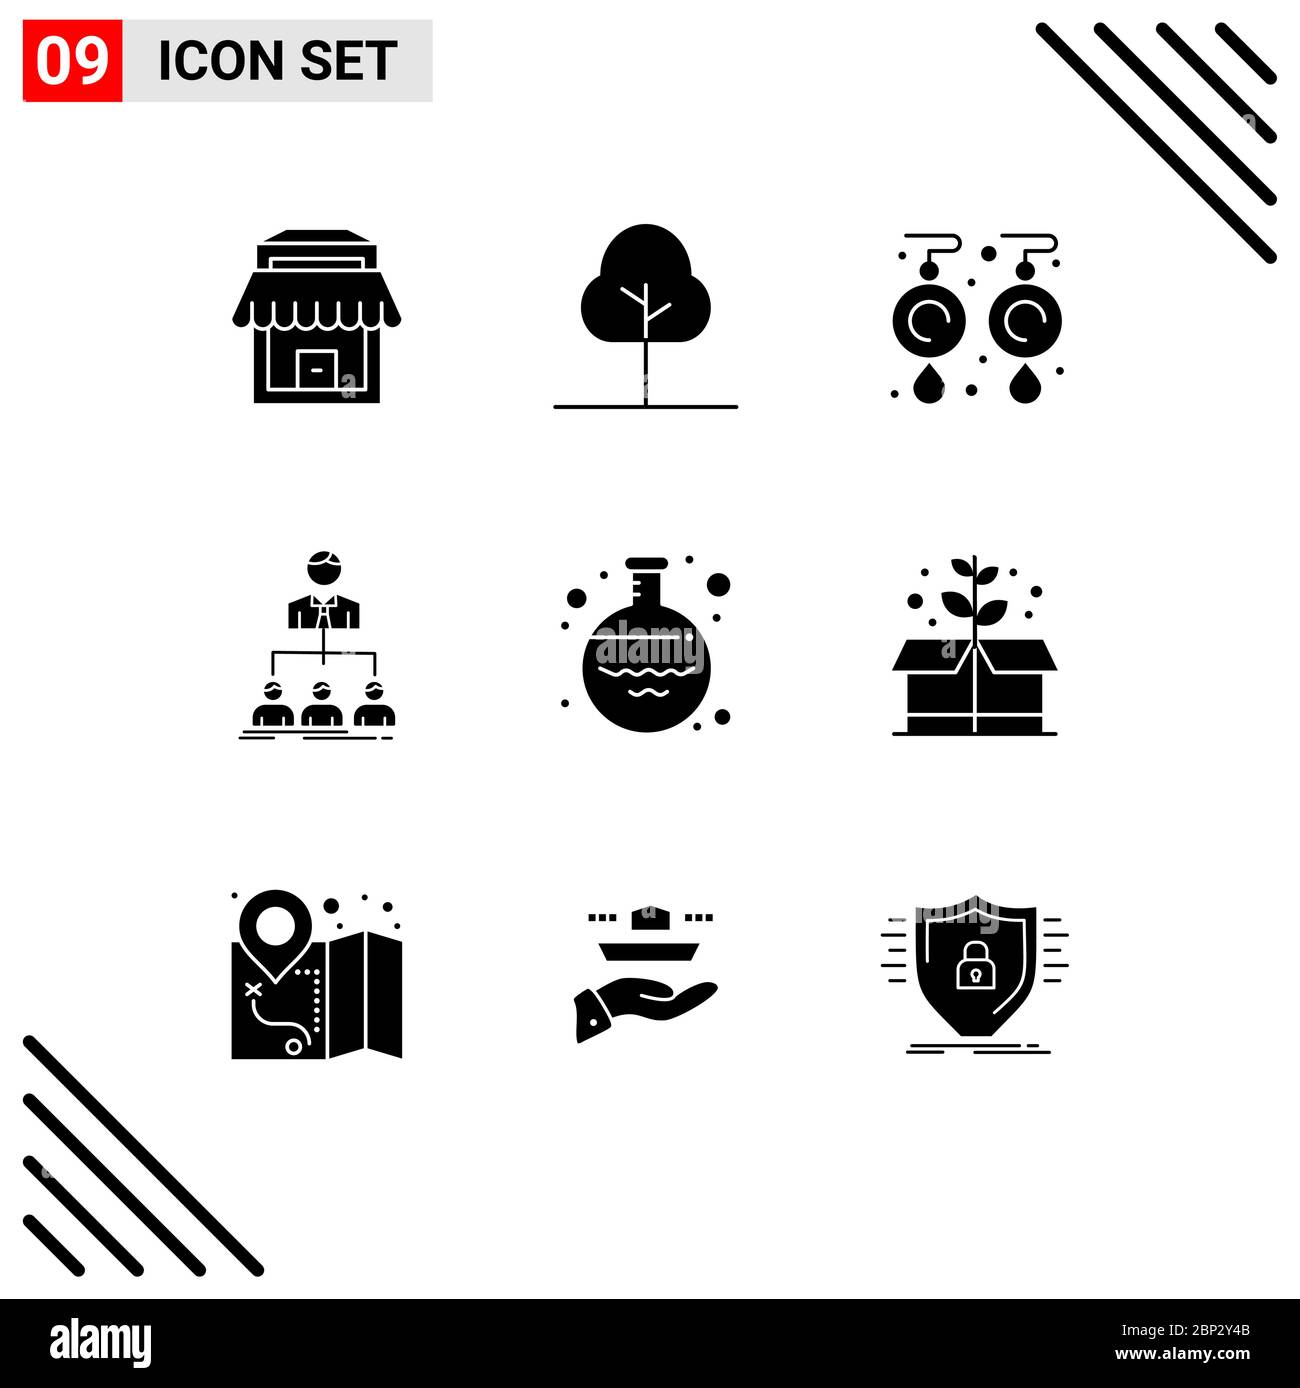 9 iconos creativos modernos signos y símbolos de farmacia, matraz, joya,  empresa, organización elementos de diseño vectorial editables Imagen Vector  de stock - Alamy